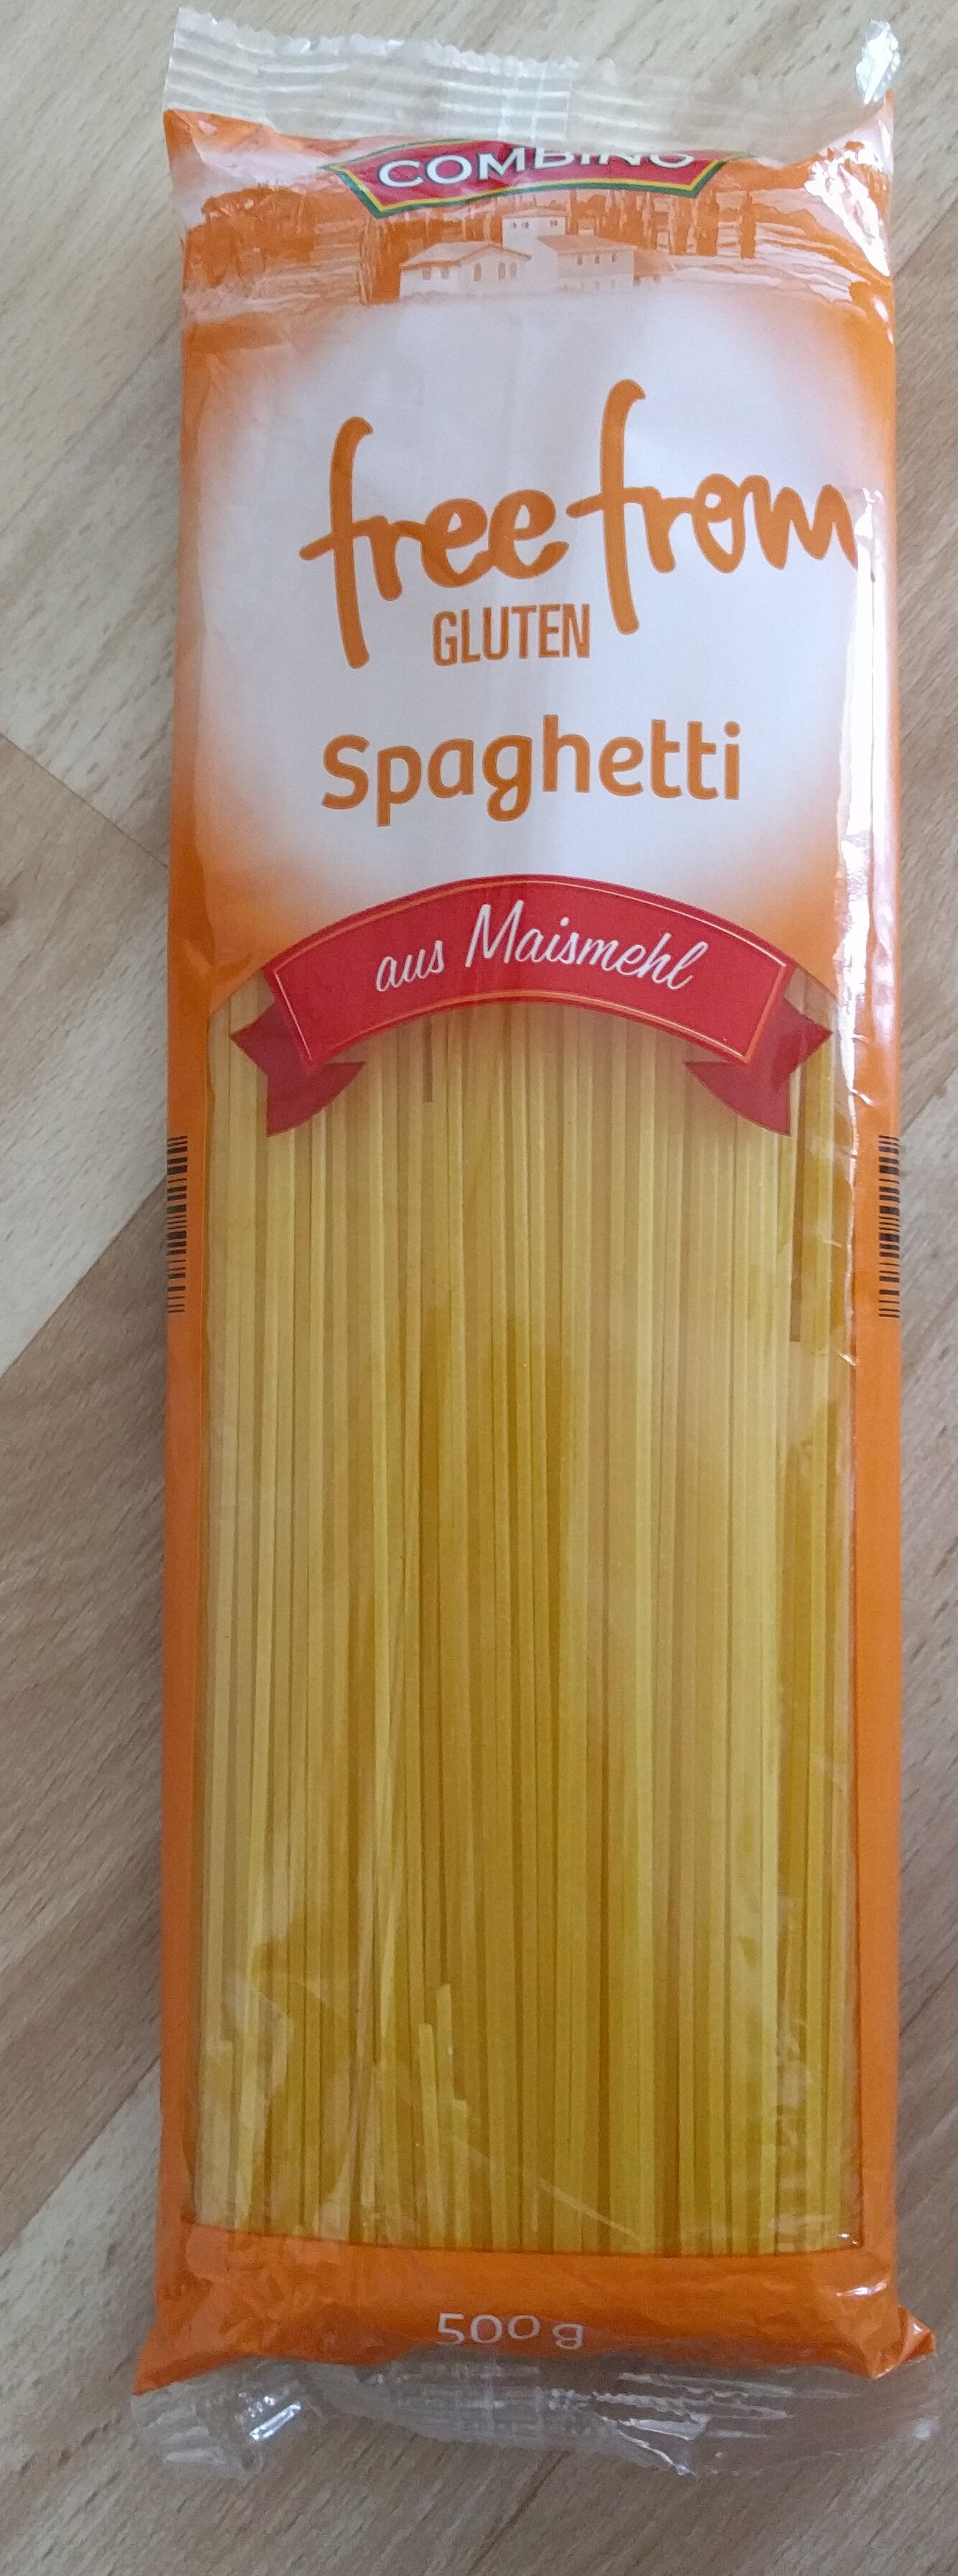 Glutenfrei Spaghetti - Product - de